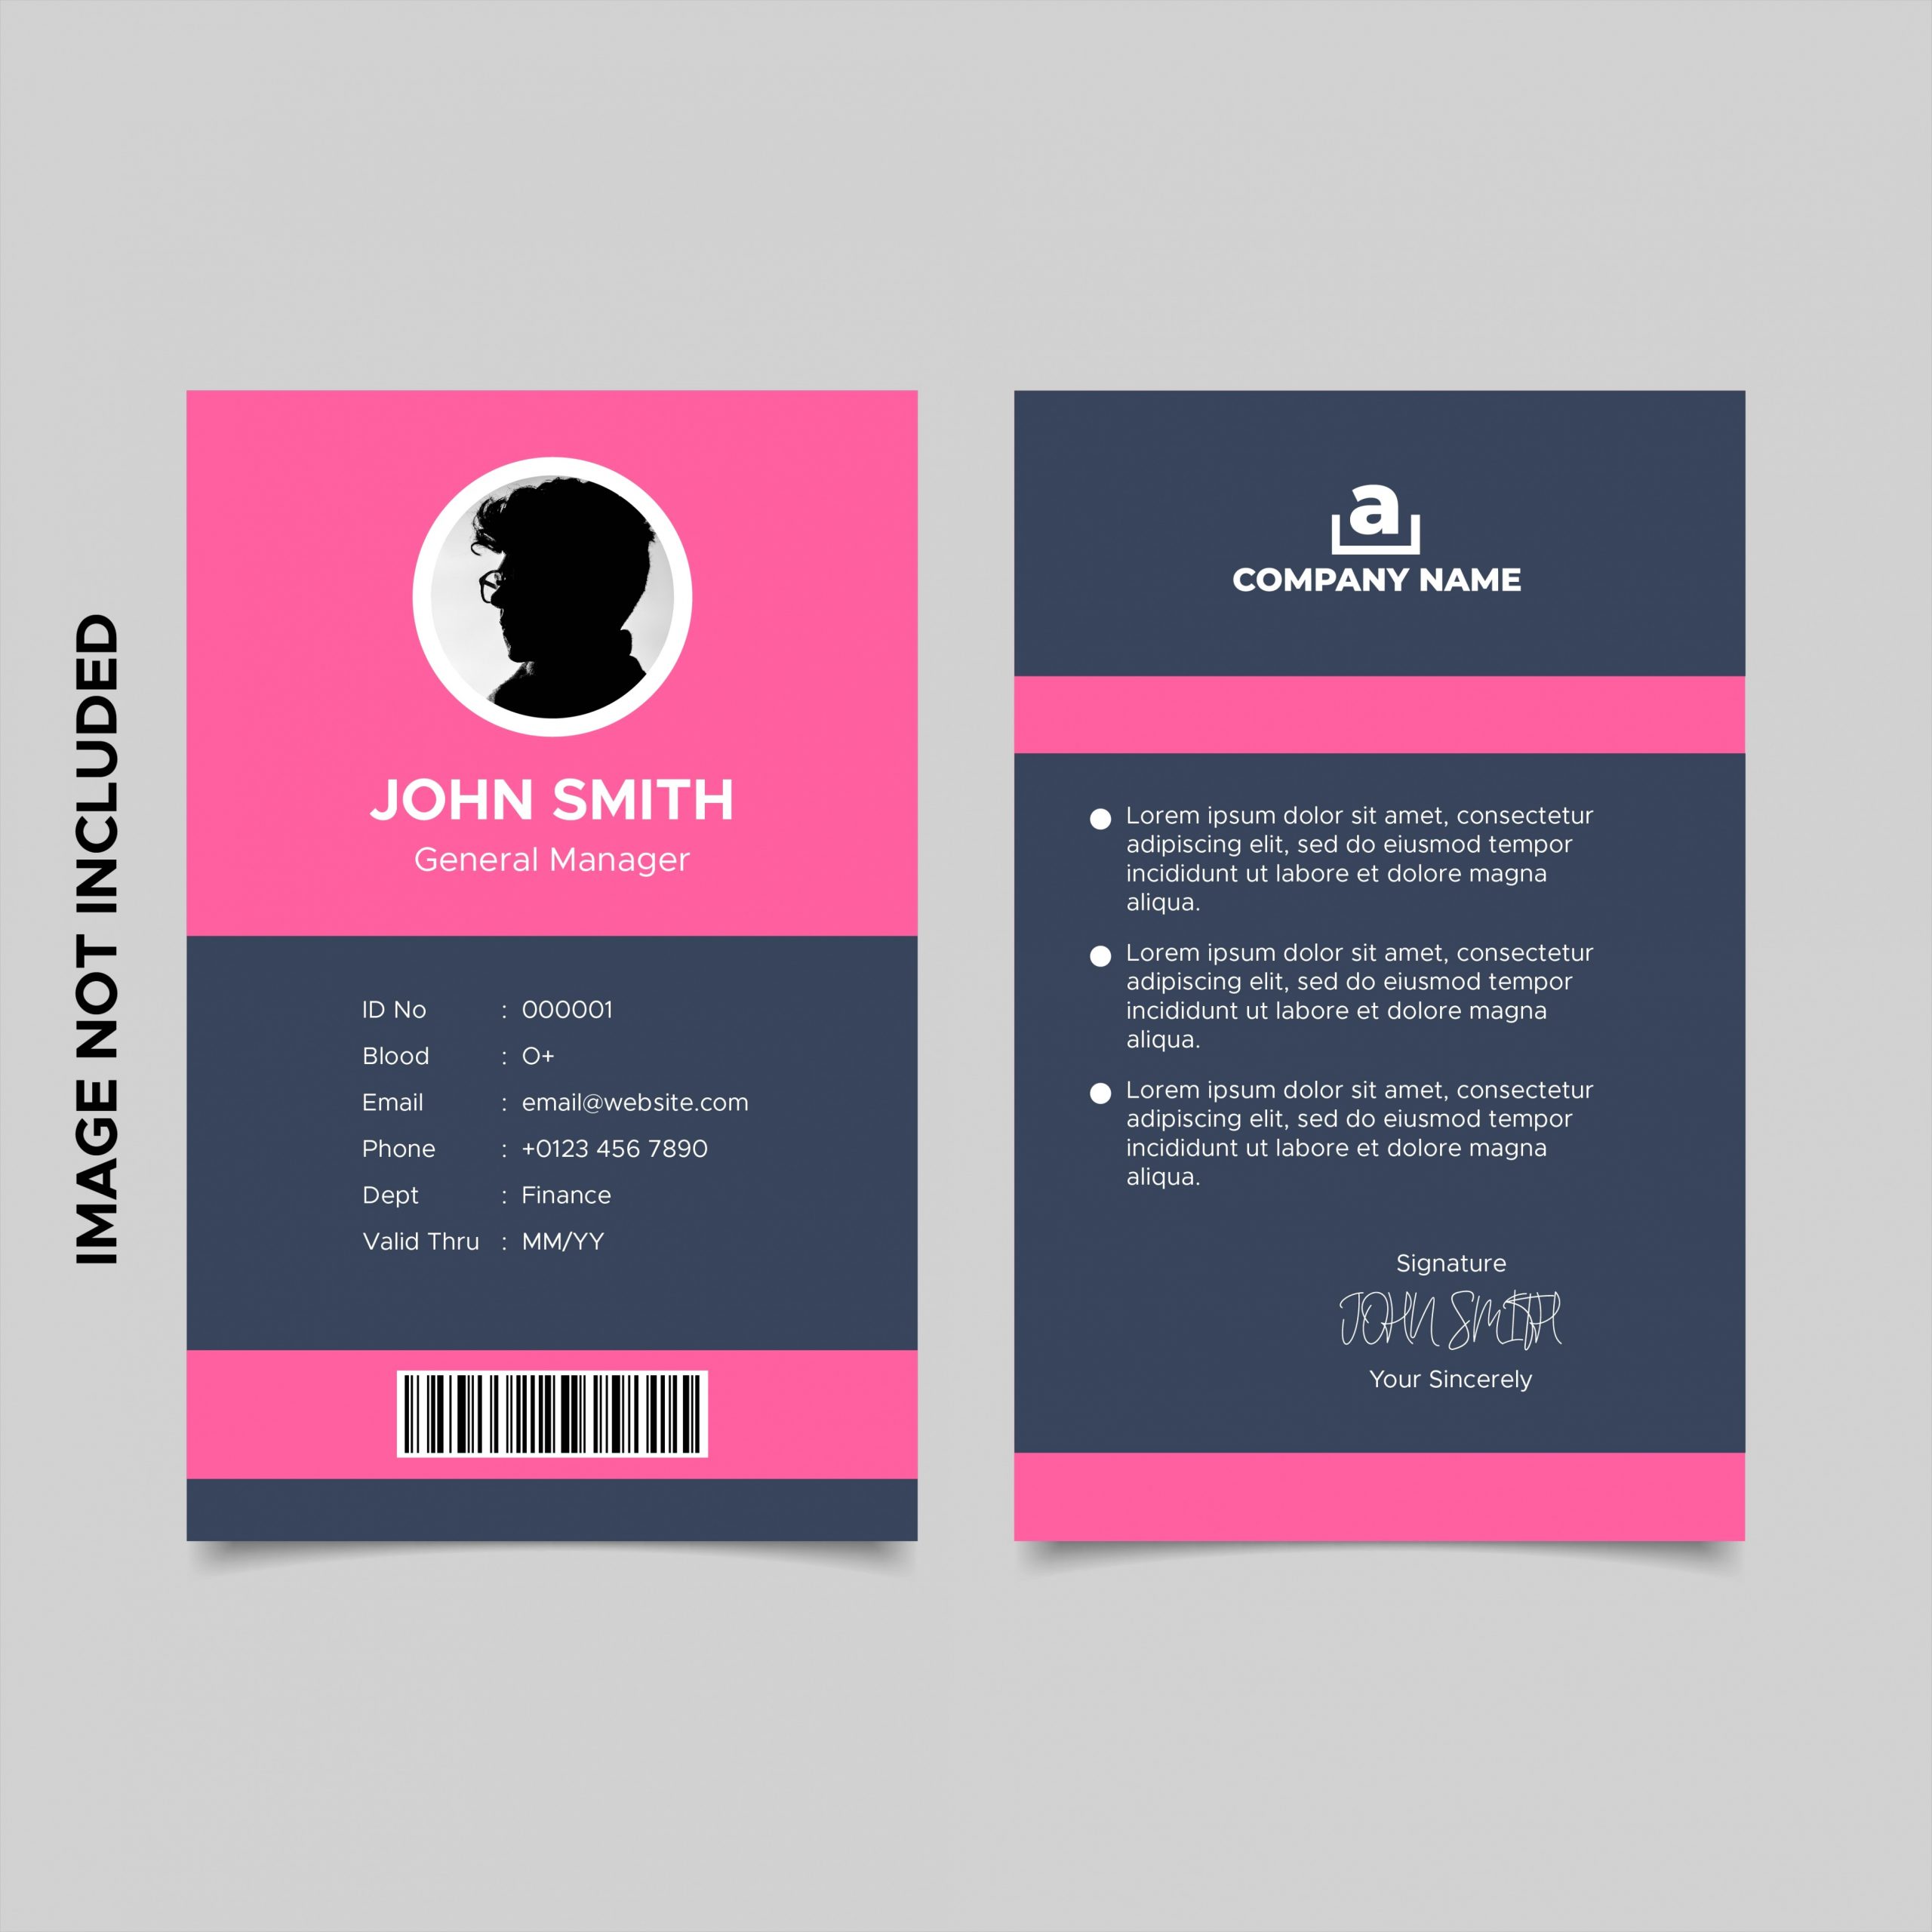 modern design employee id card template